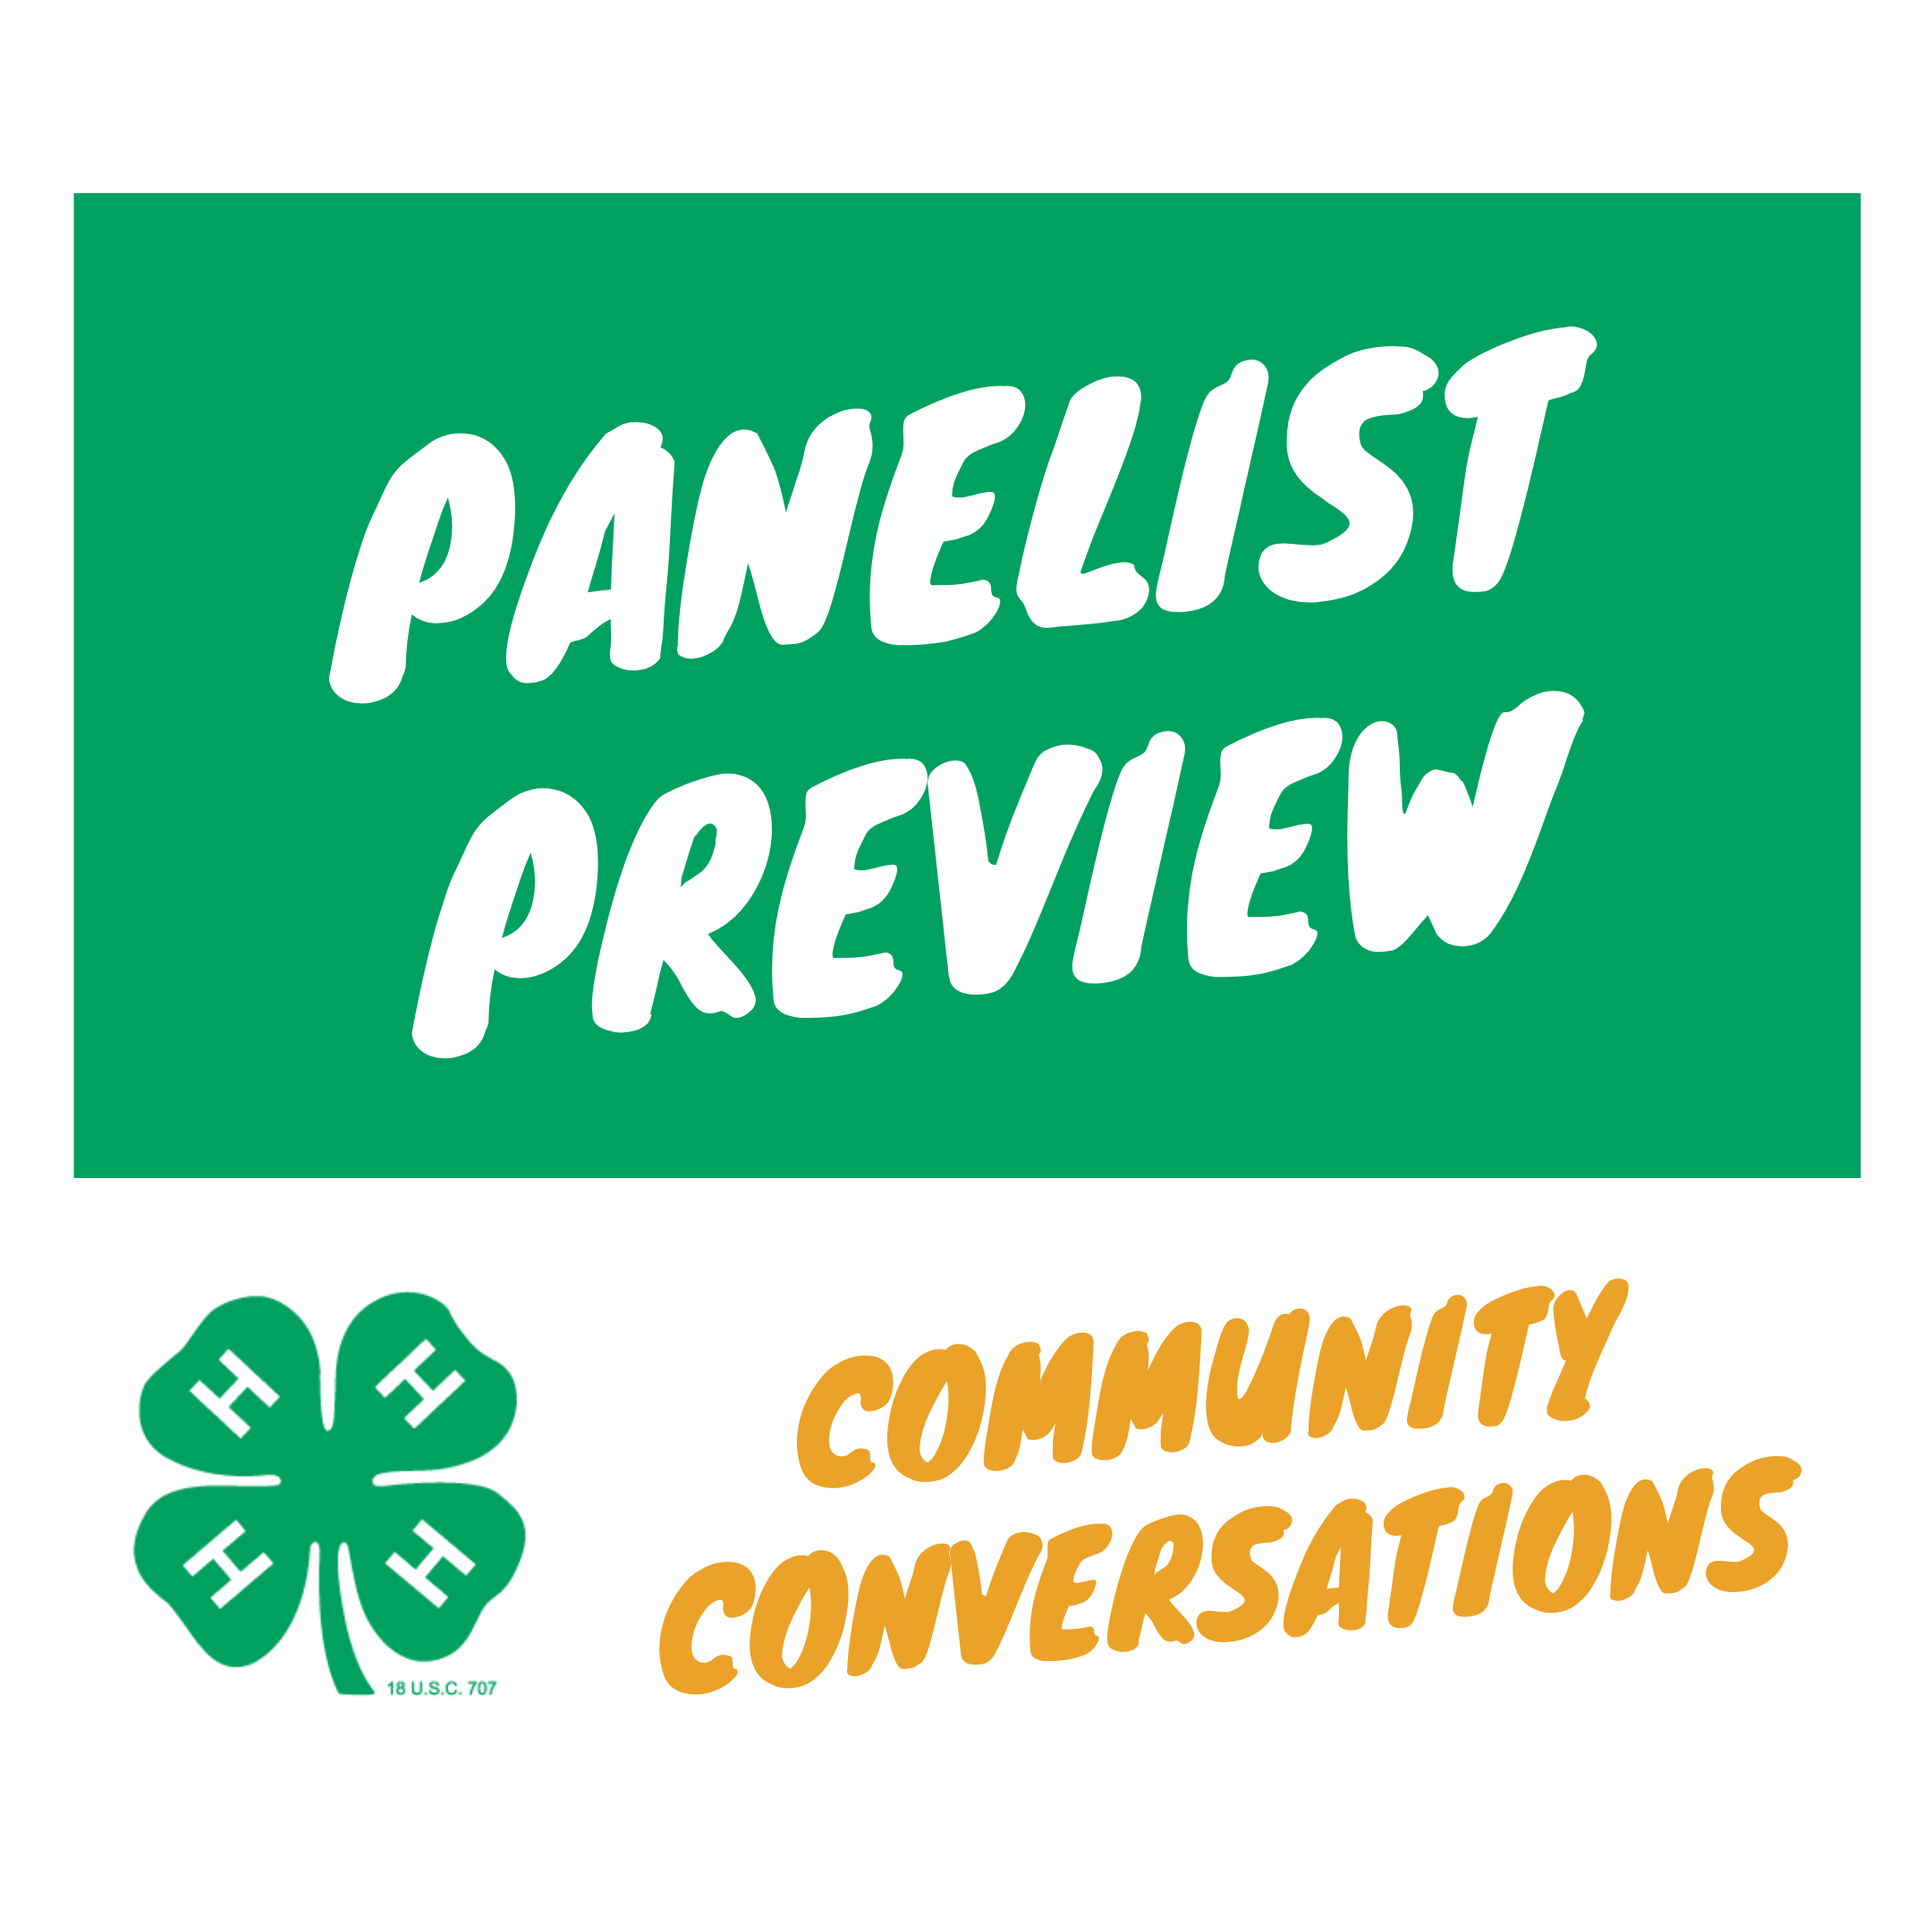 Panelist preview for Community Conversations event